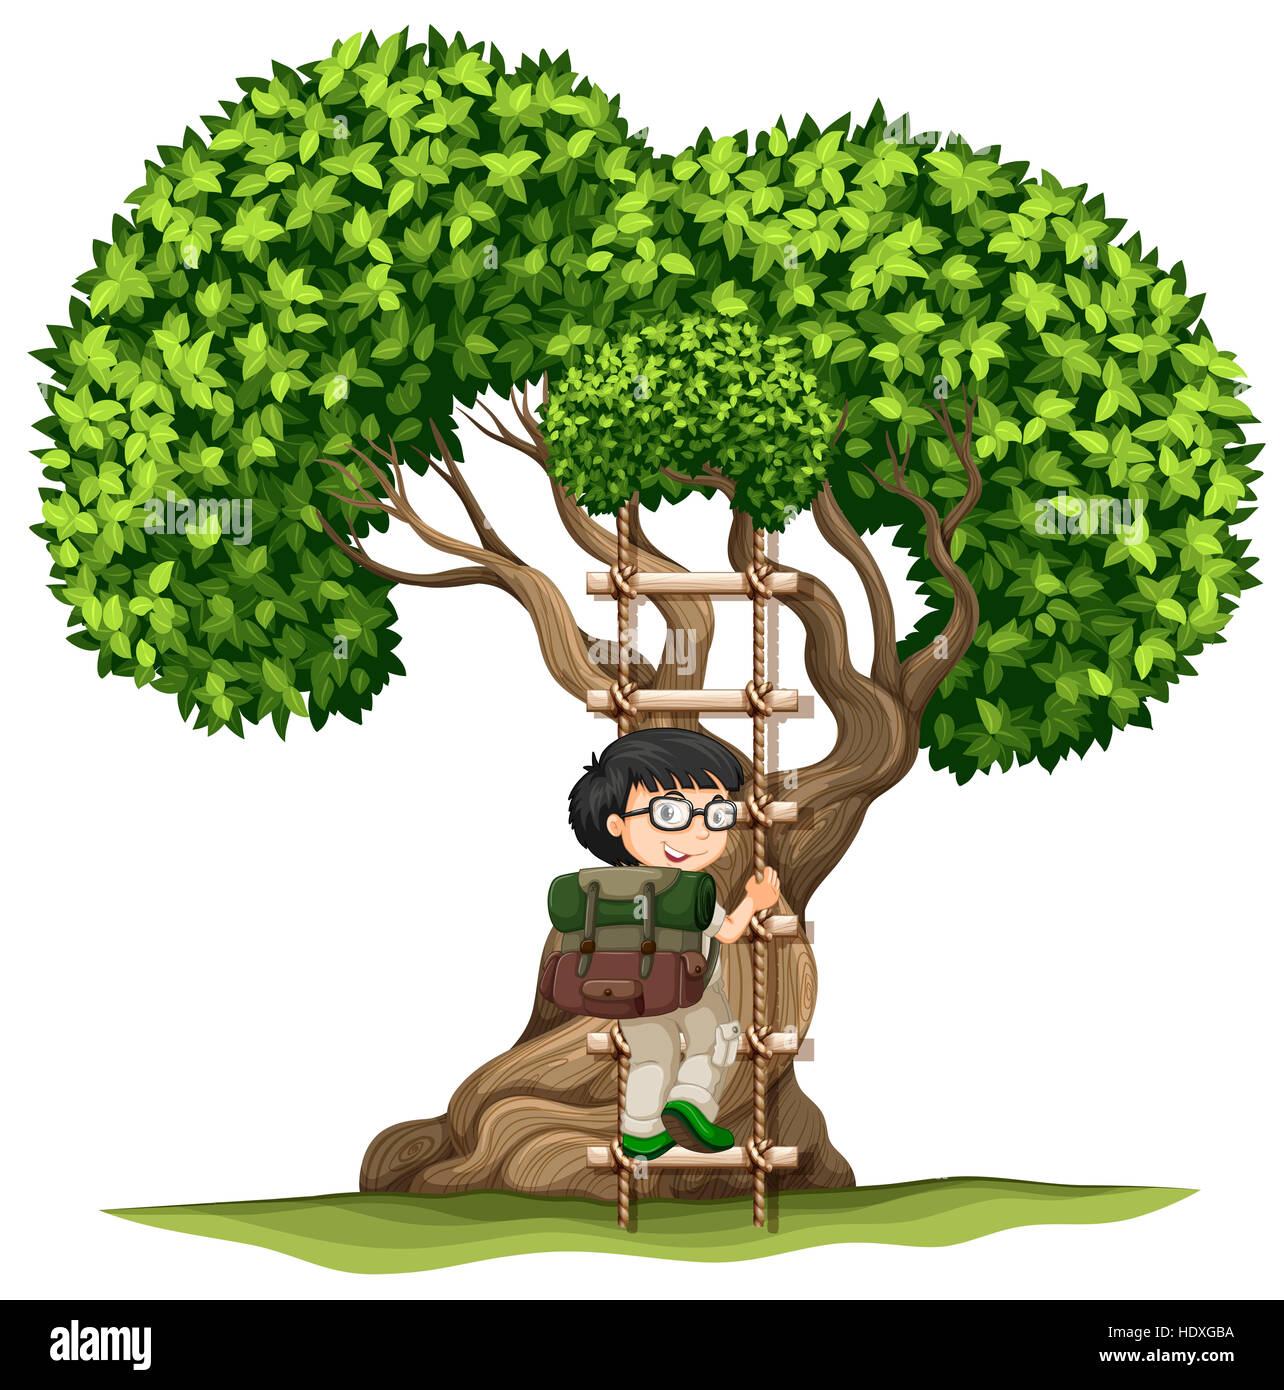 Boy climbing up the tree illustration Stock Photo - Alamy